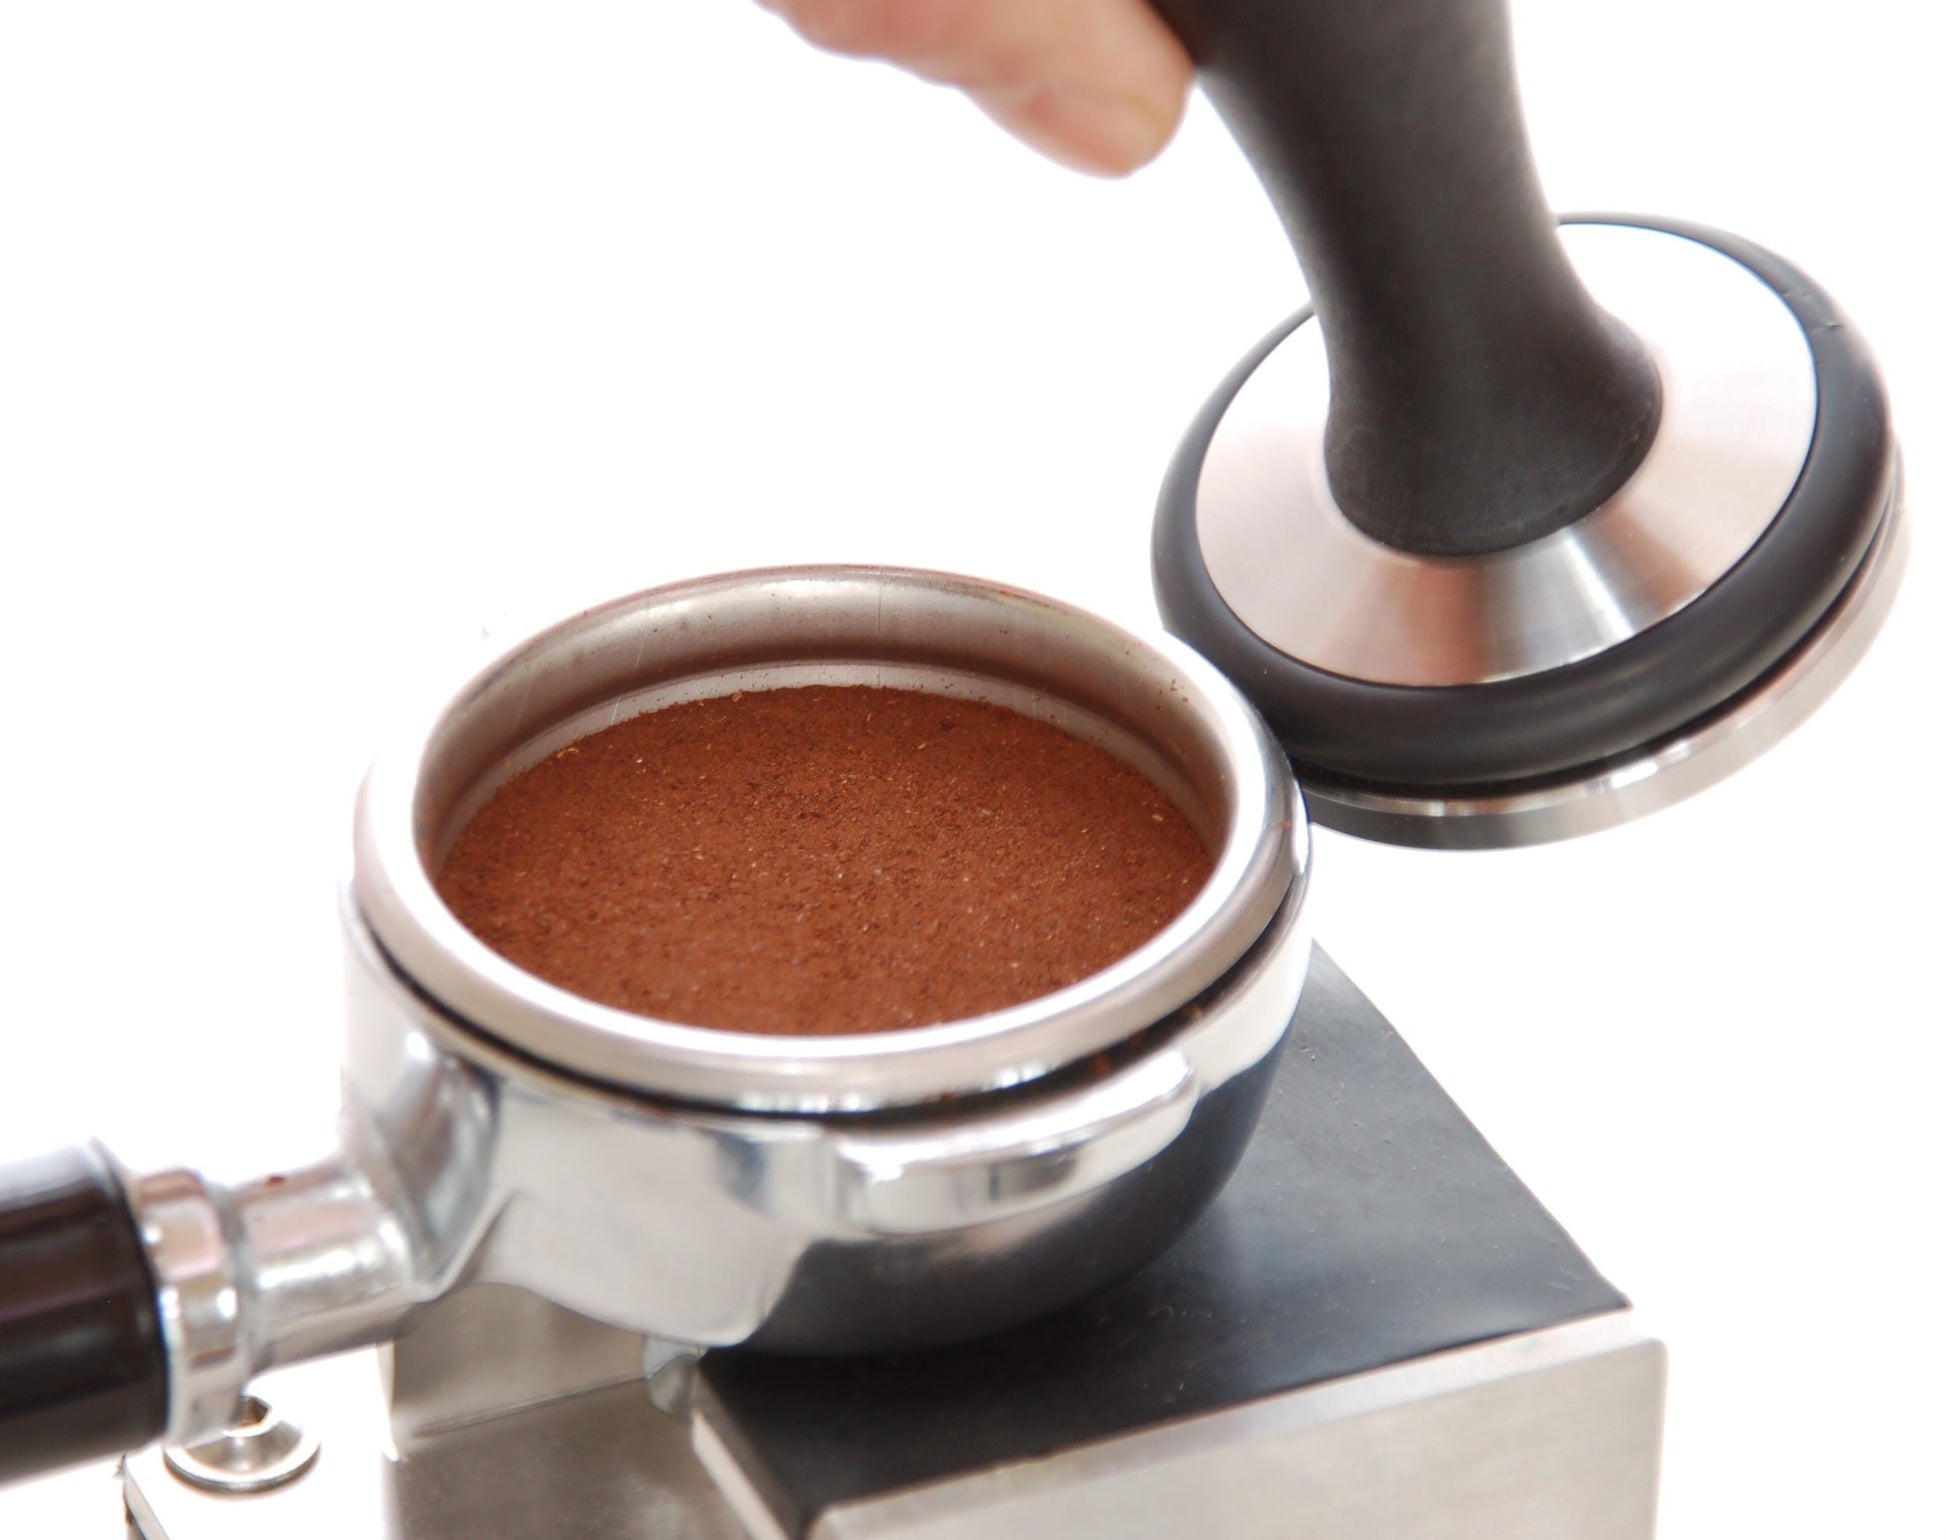 Base Knock Convex for Customized Espresso Tamper